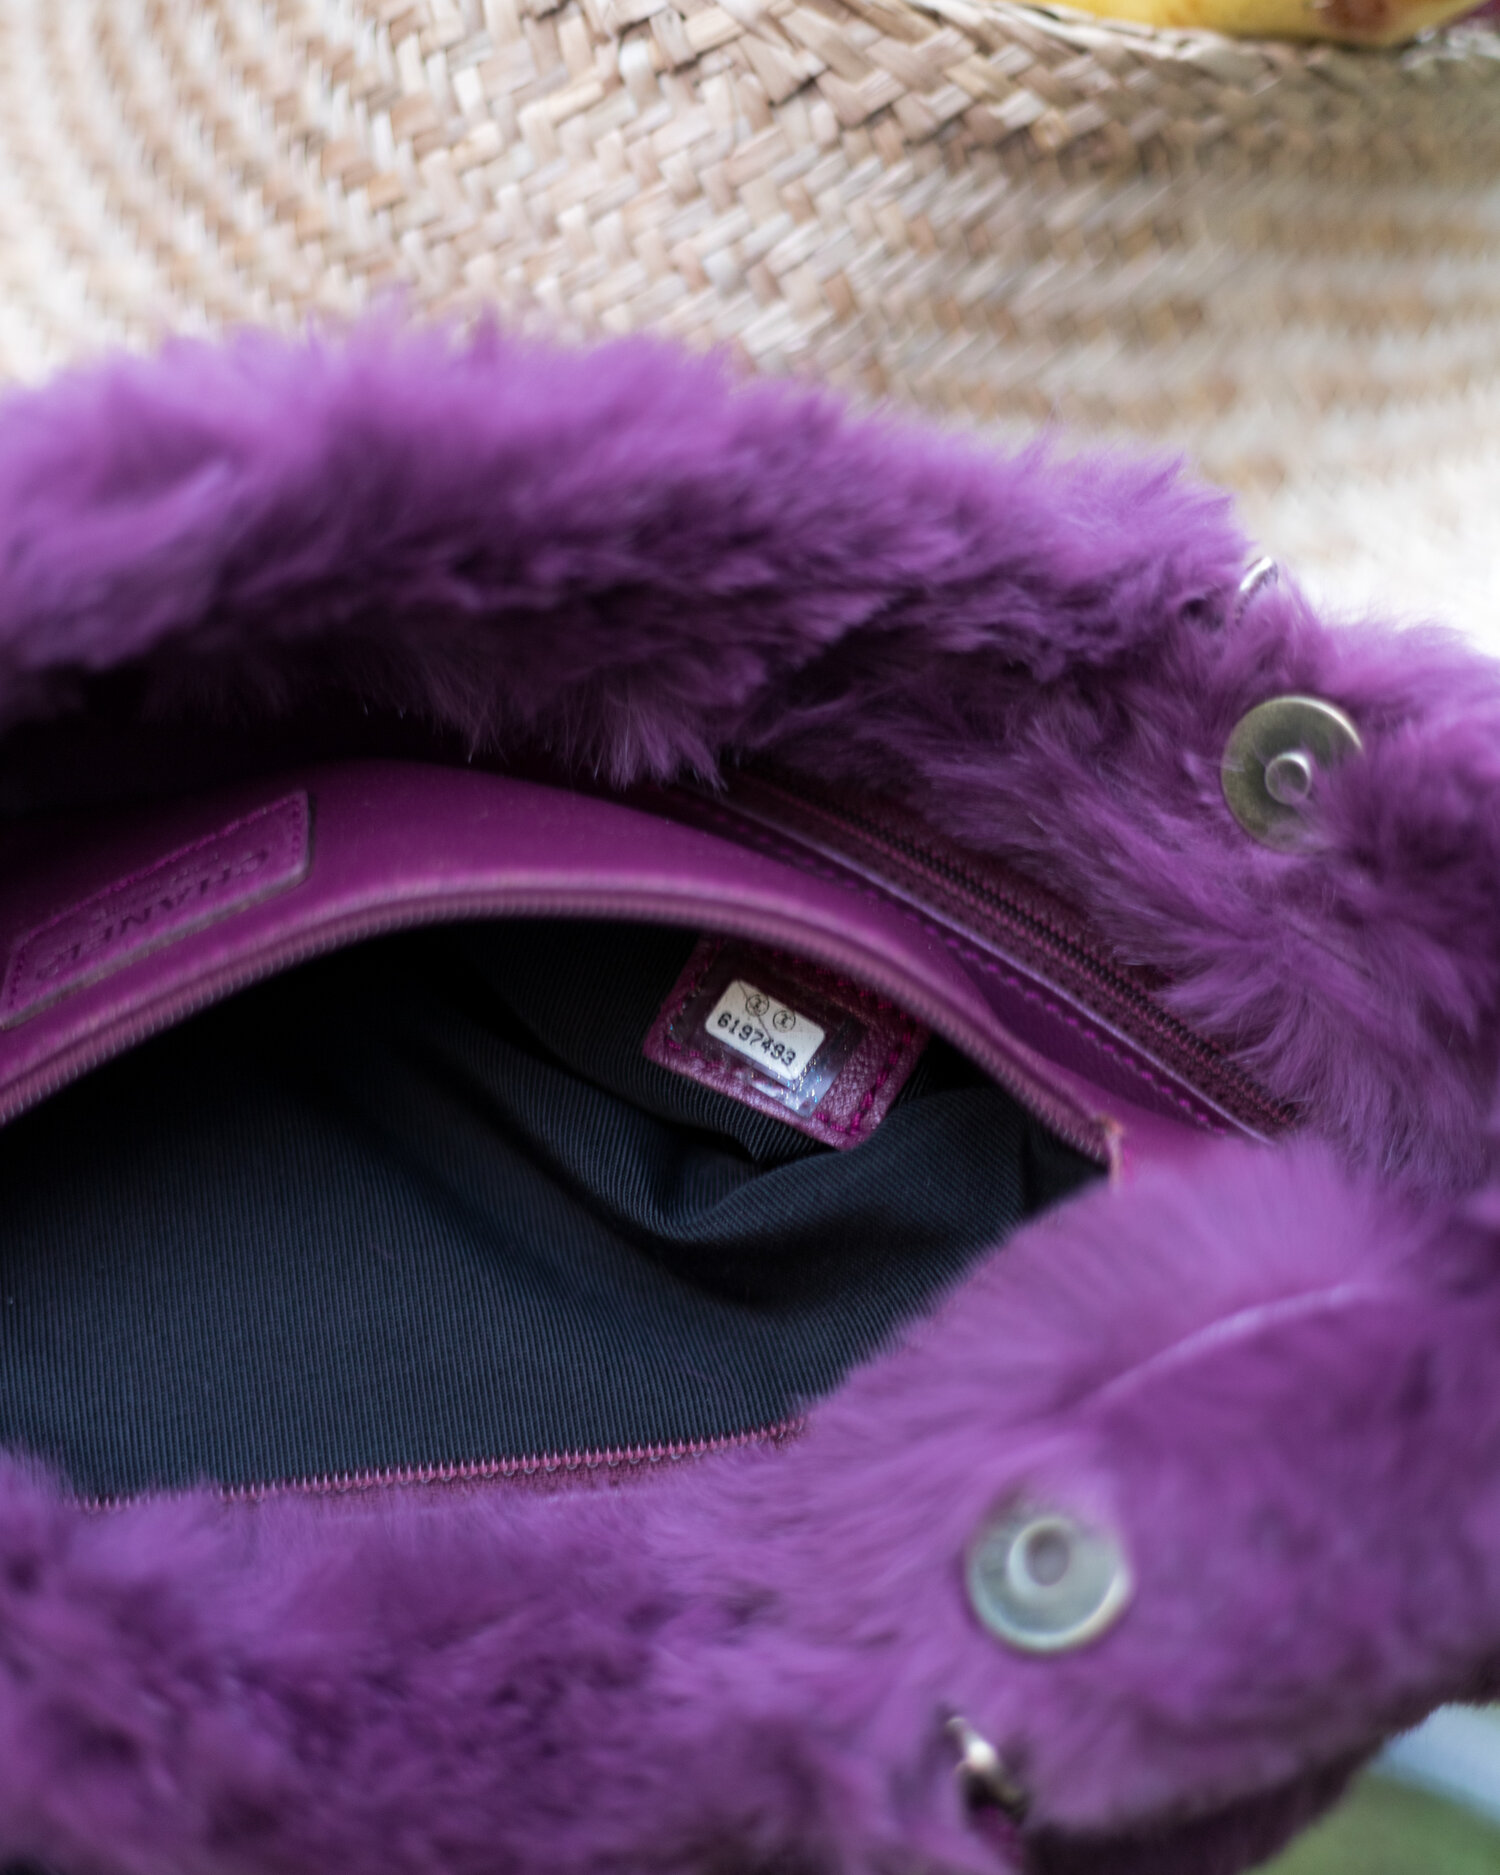 Vintage Chanel Shopping Bag in Violet Rabbit Fur — singulié